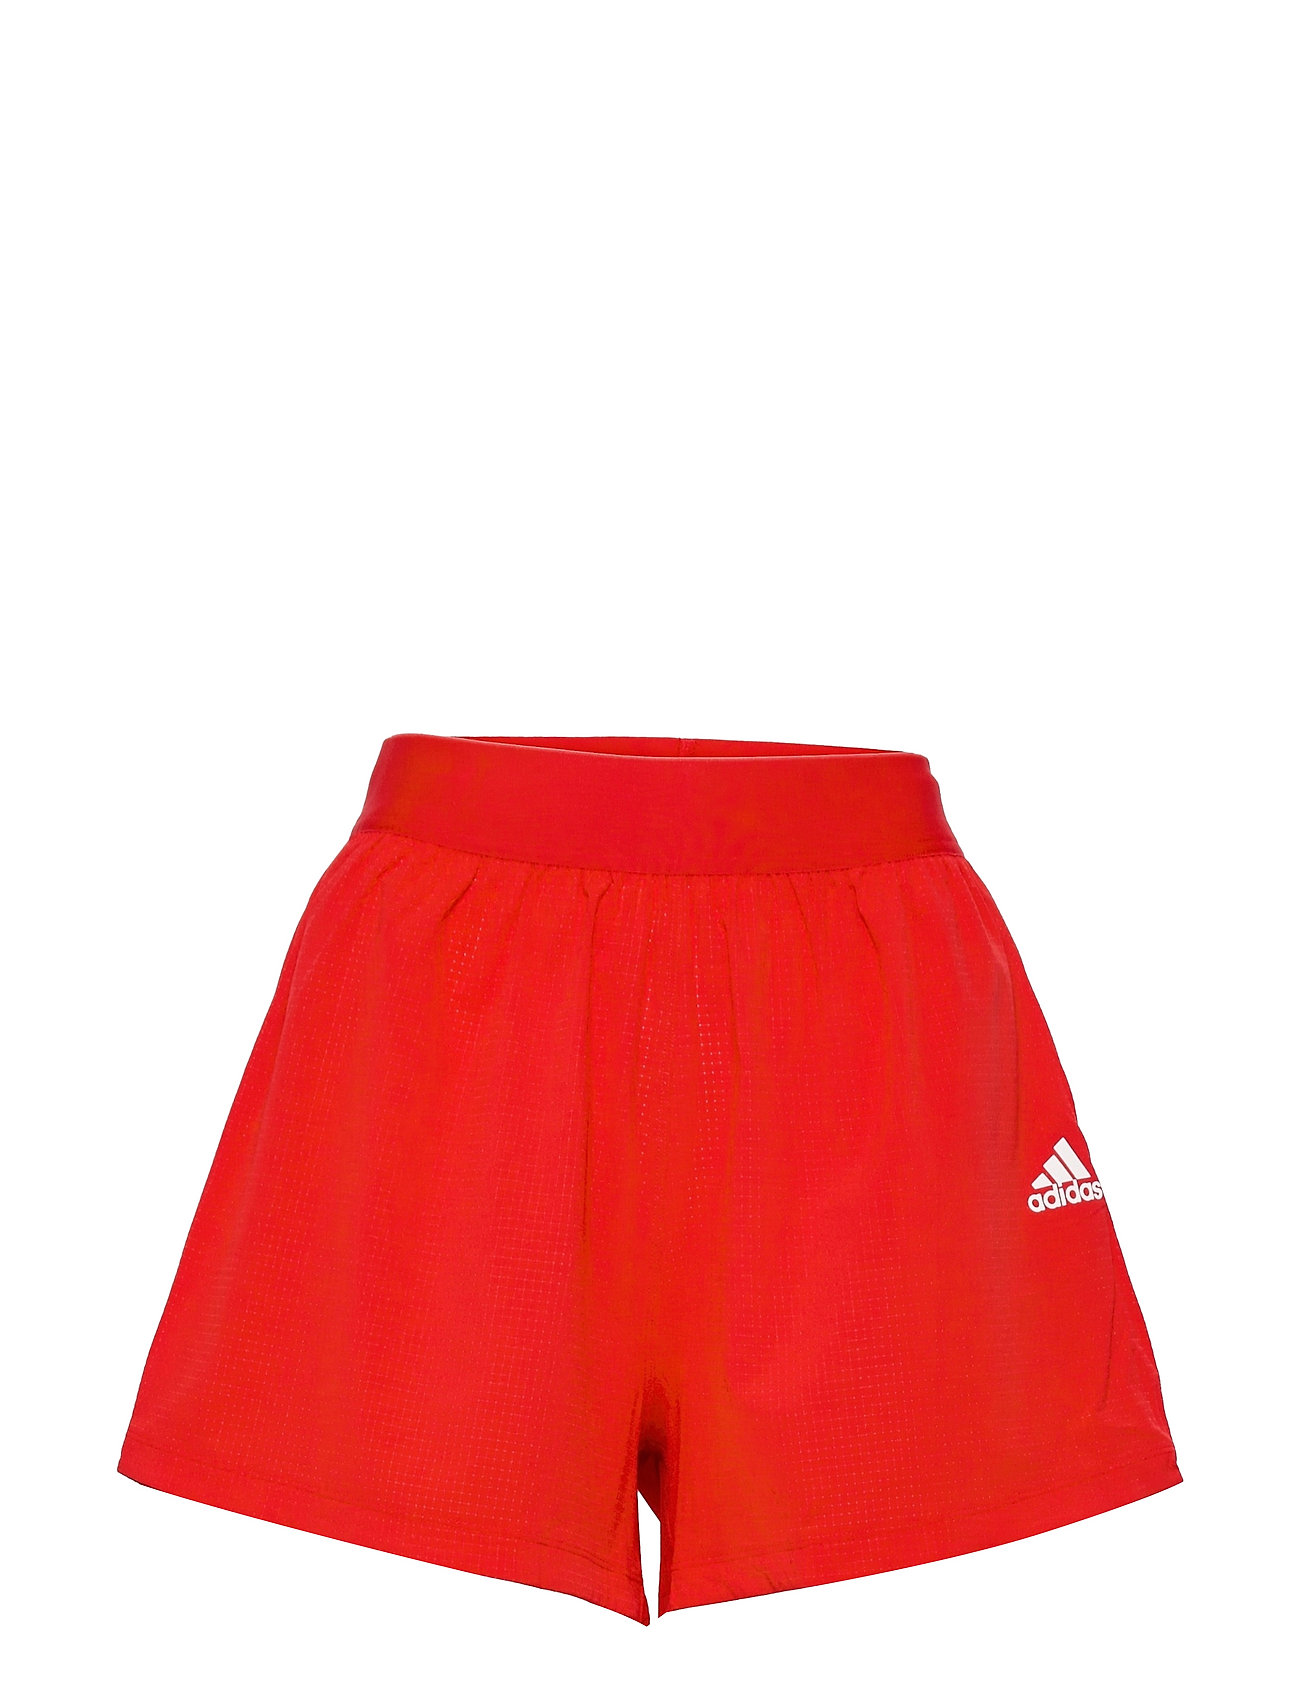 Heat.Rdy Lightweight Woven Shorts W Shorts Sport Shorts Punainen Adidas Performance, adidas Performance